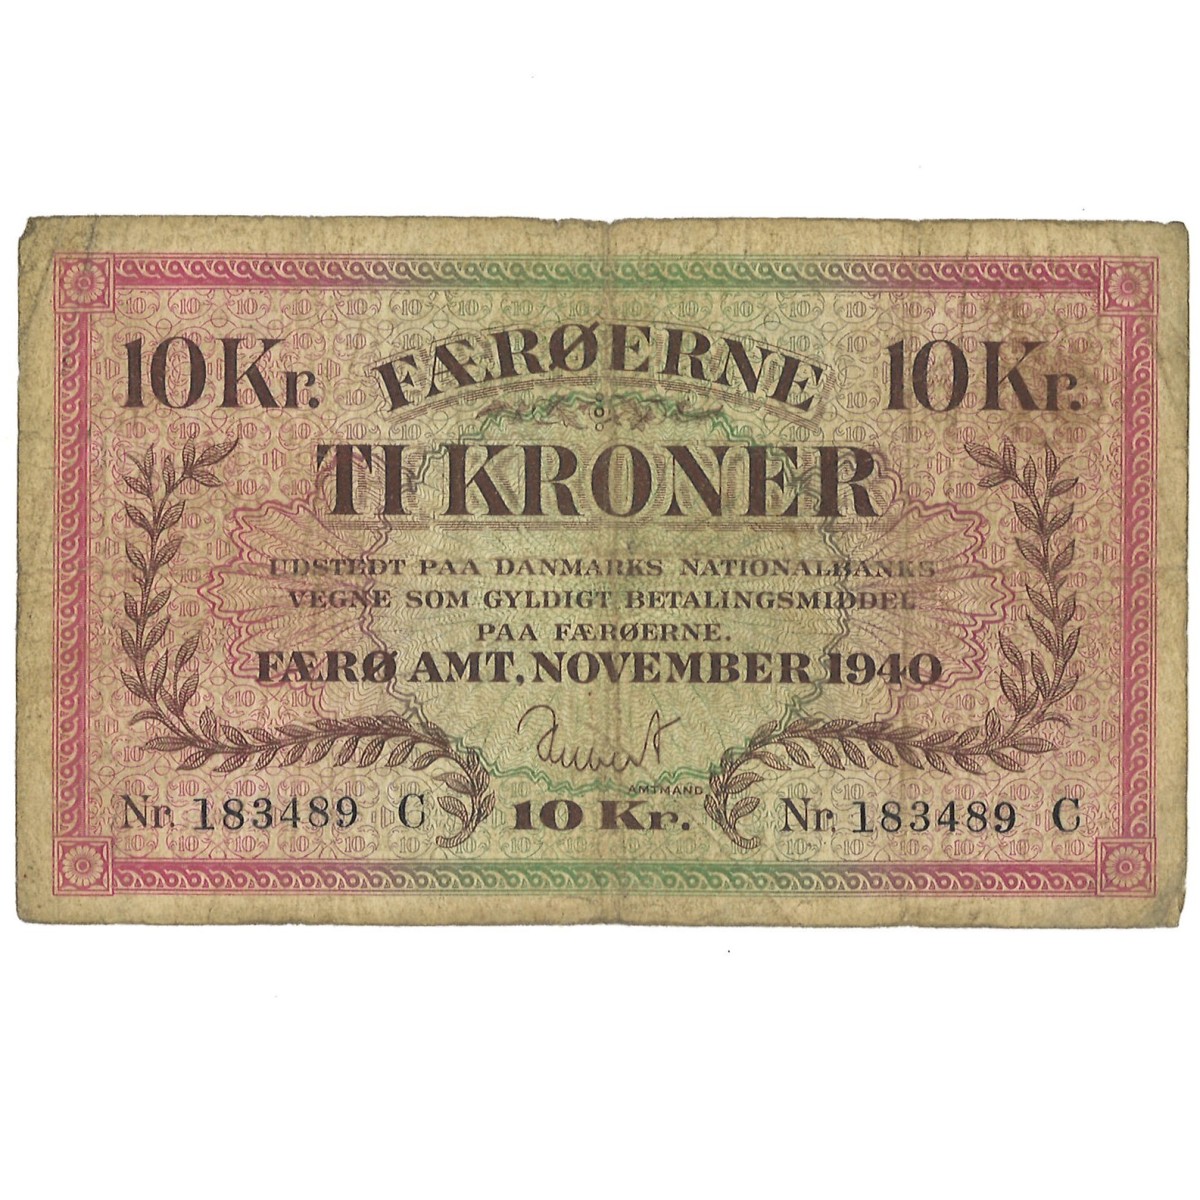 Denmark. 10 Kroner. Banknotes. Type 1940. - Very fine.